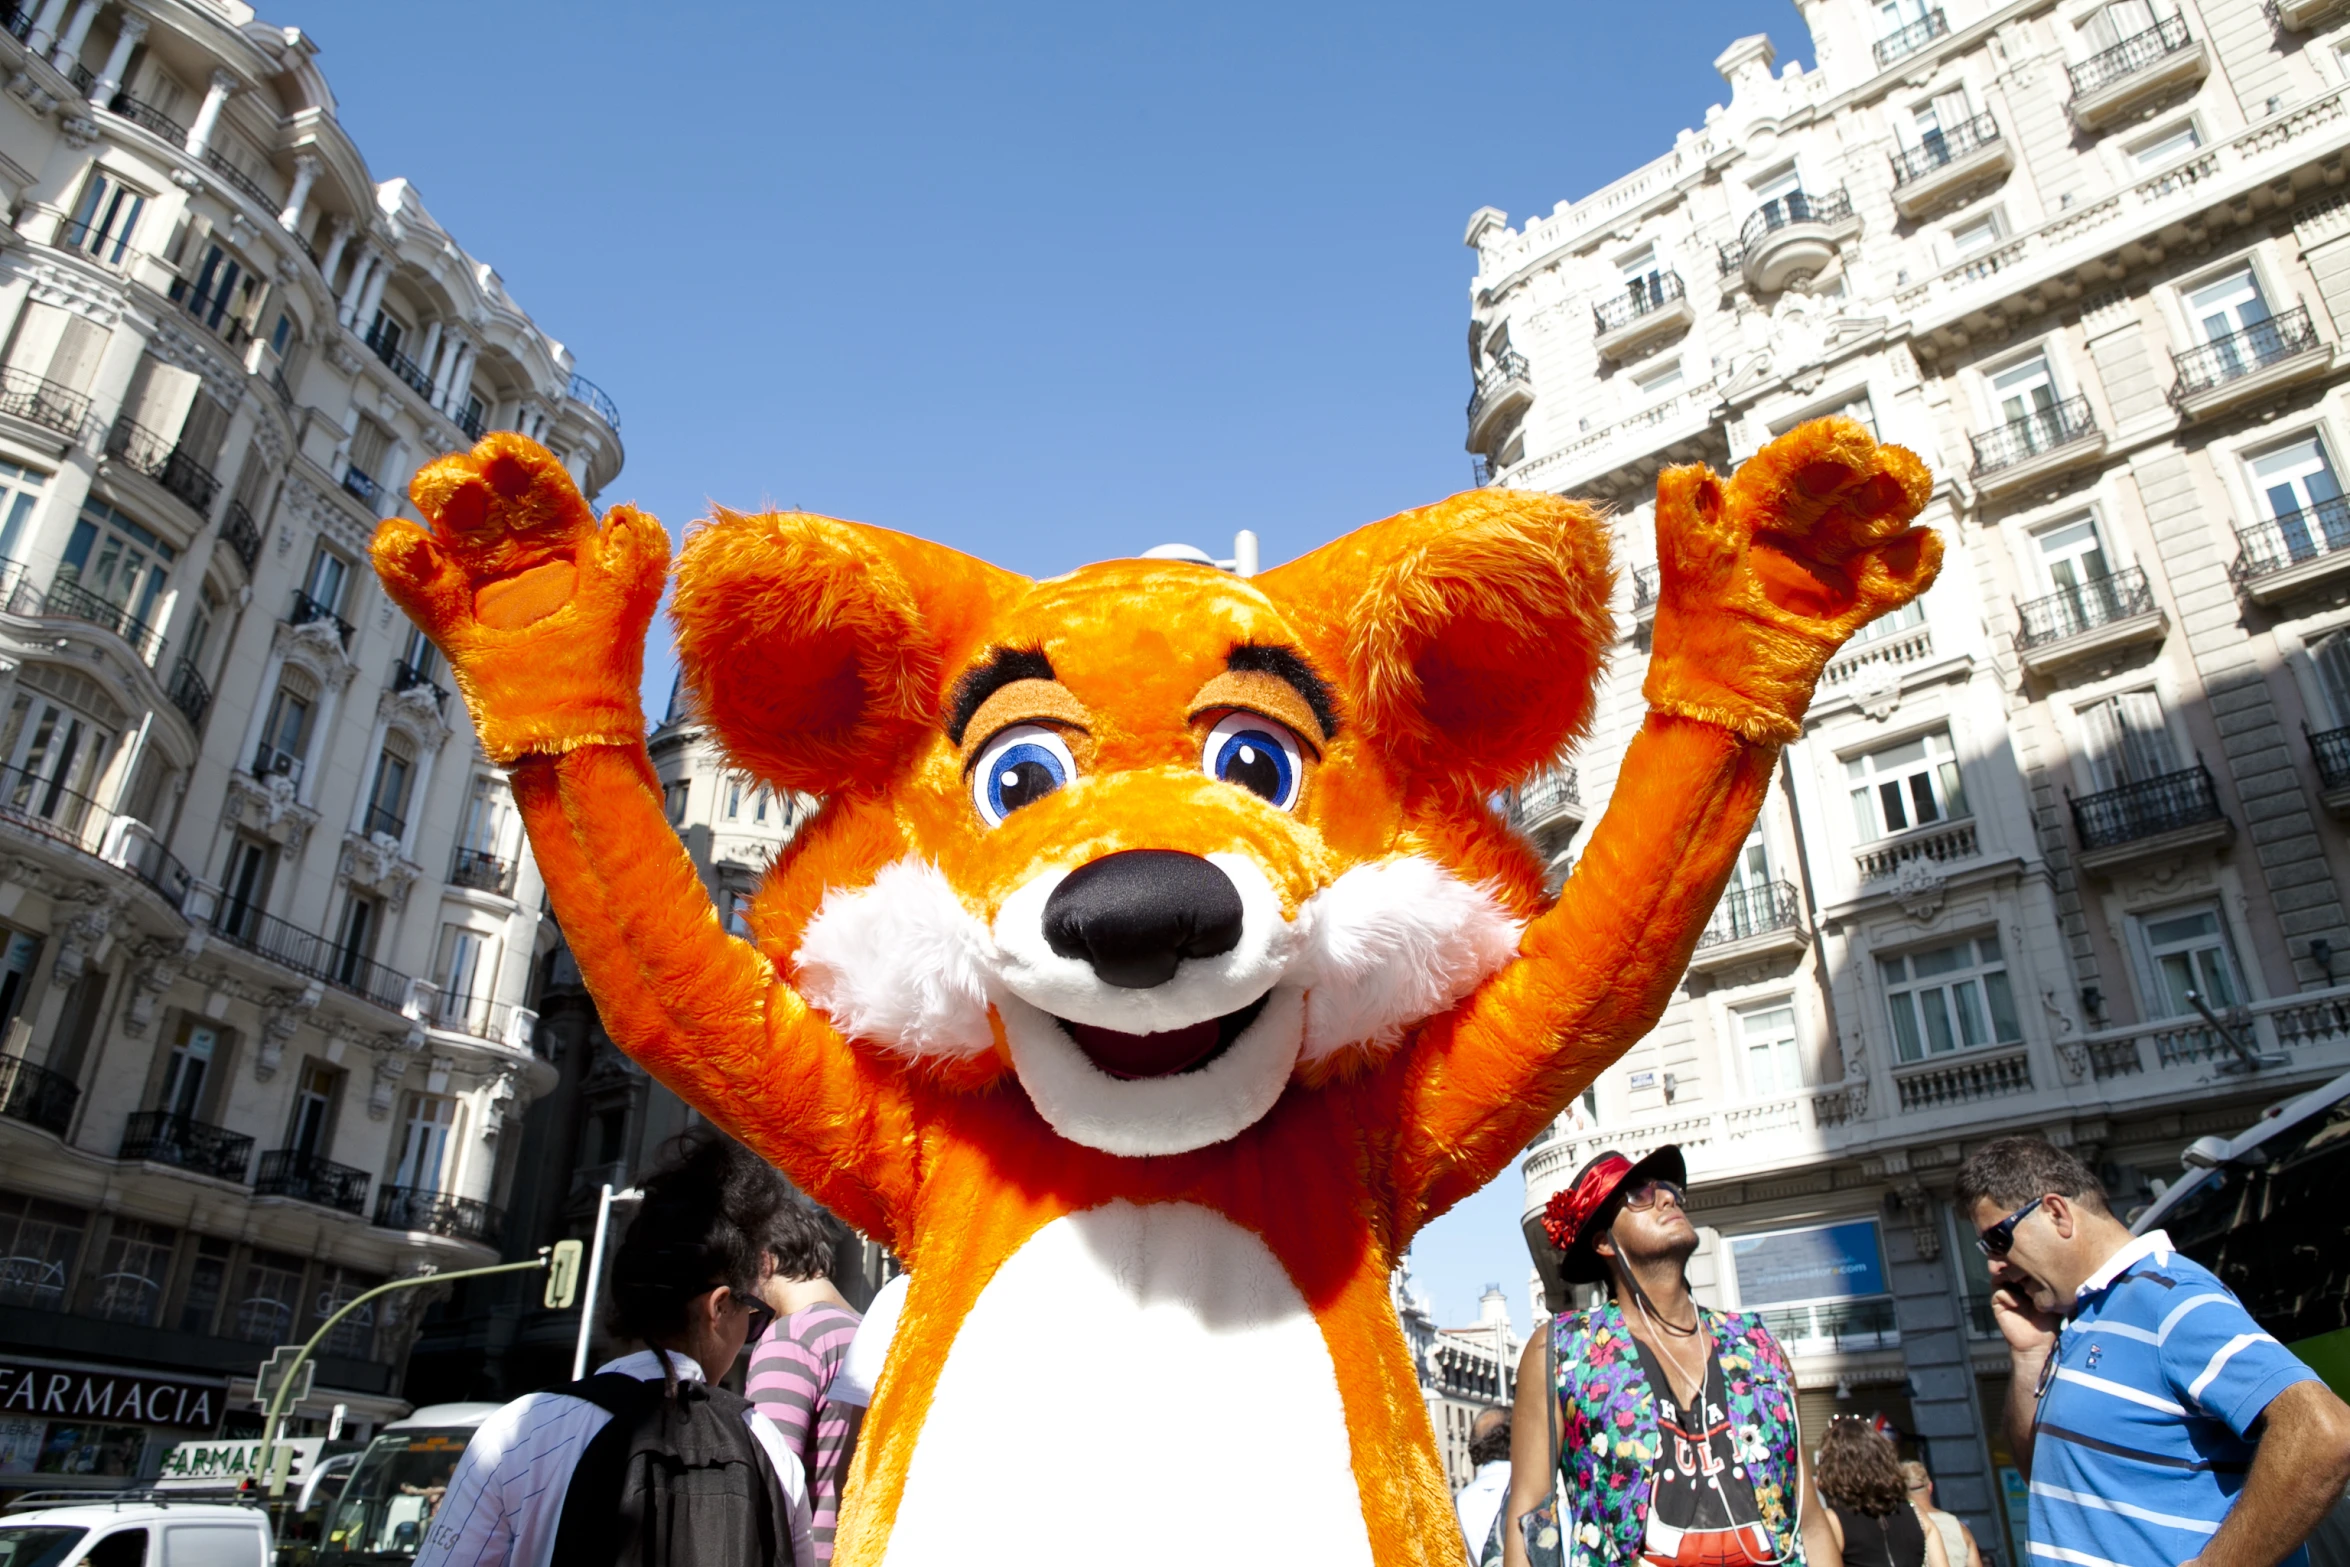 a orange bear costume in a city square